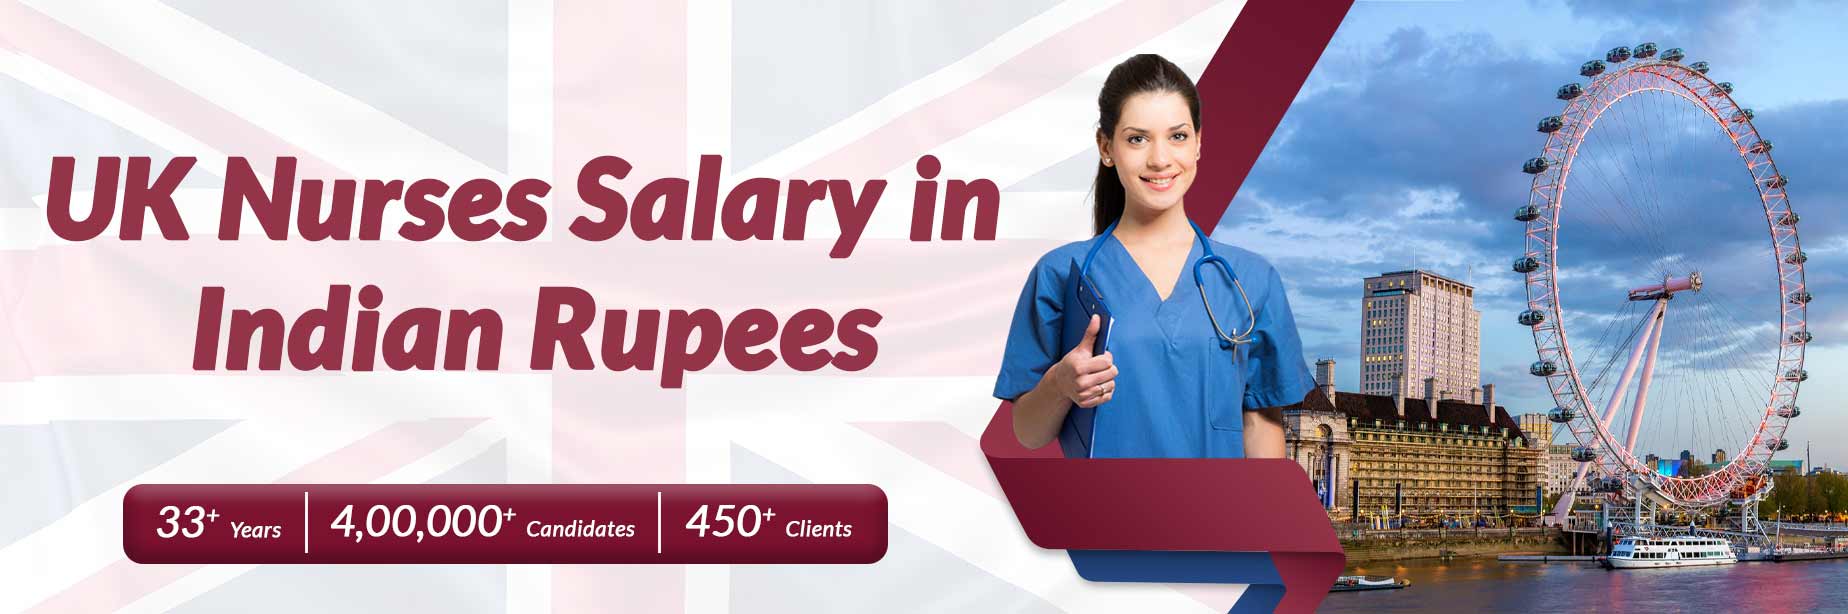 UK Nurses Salary in Indian Rupees